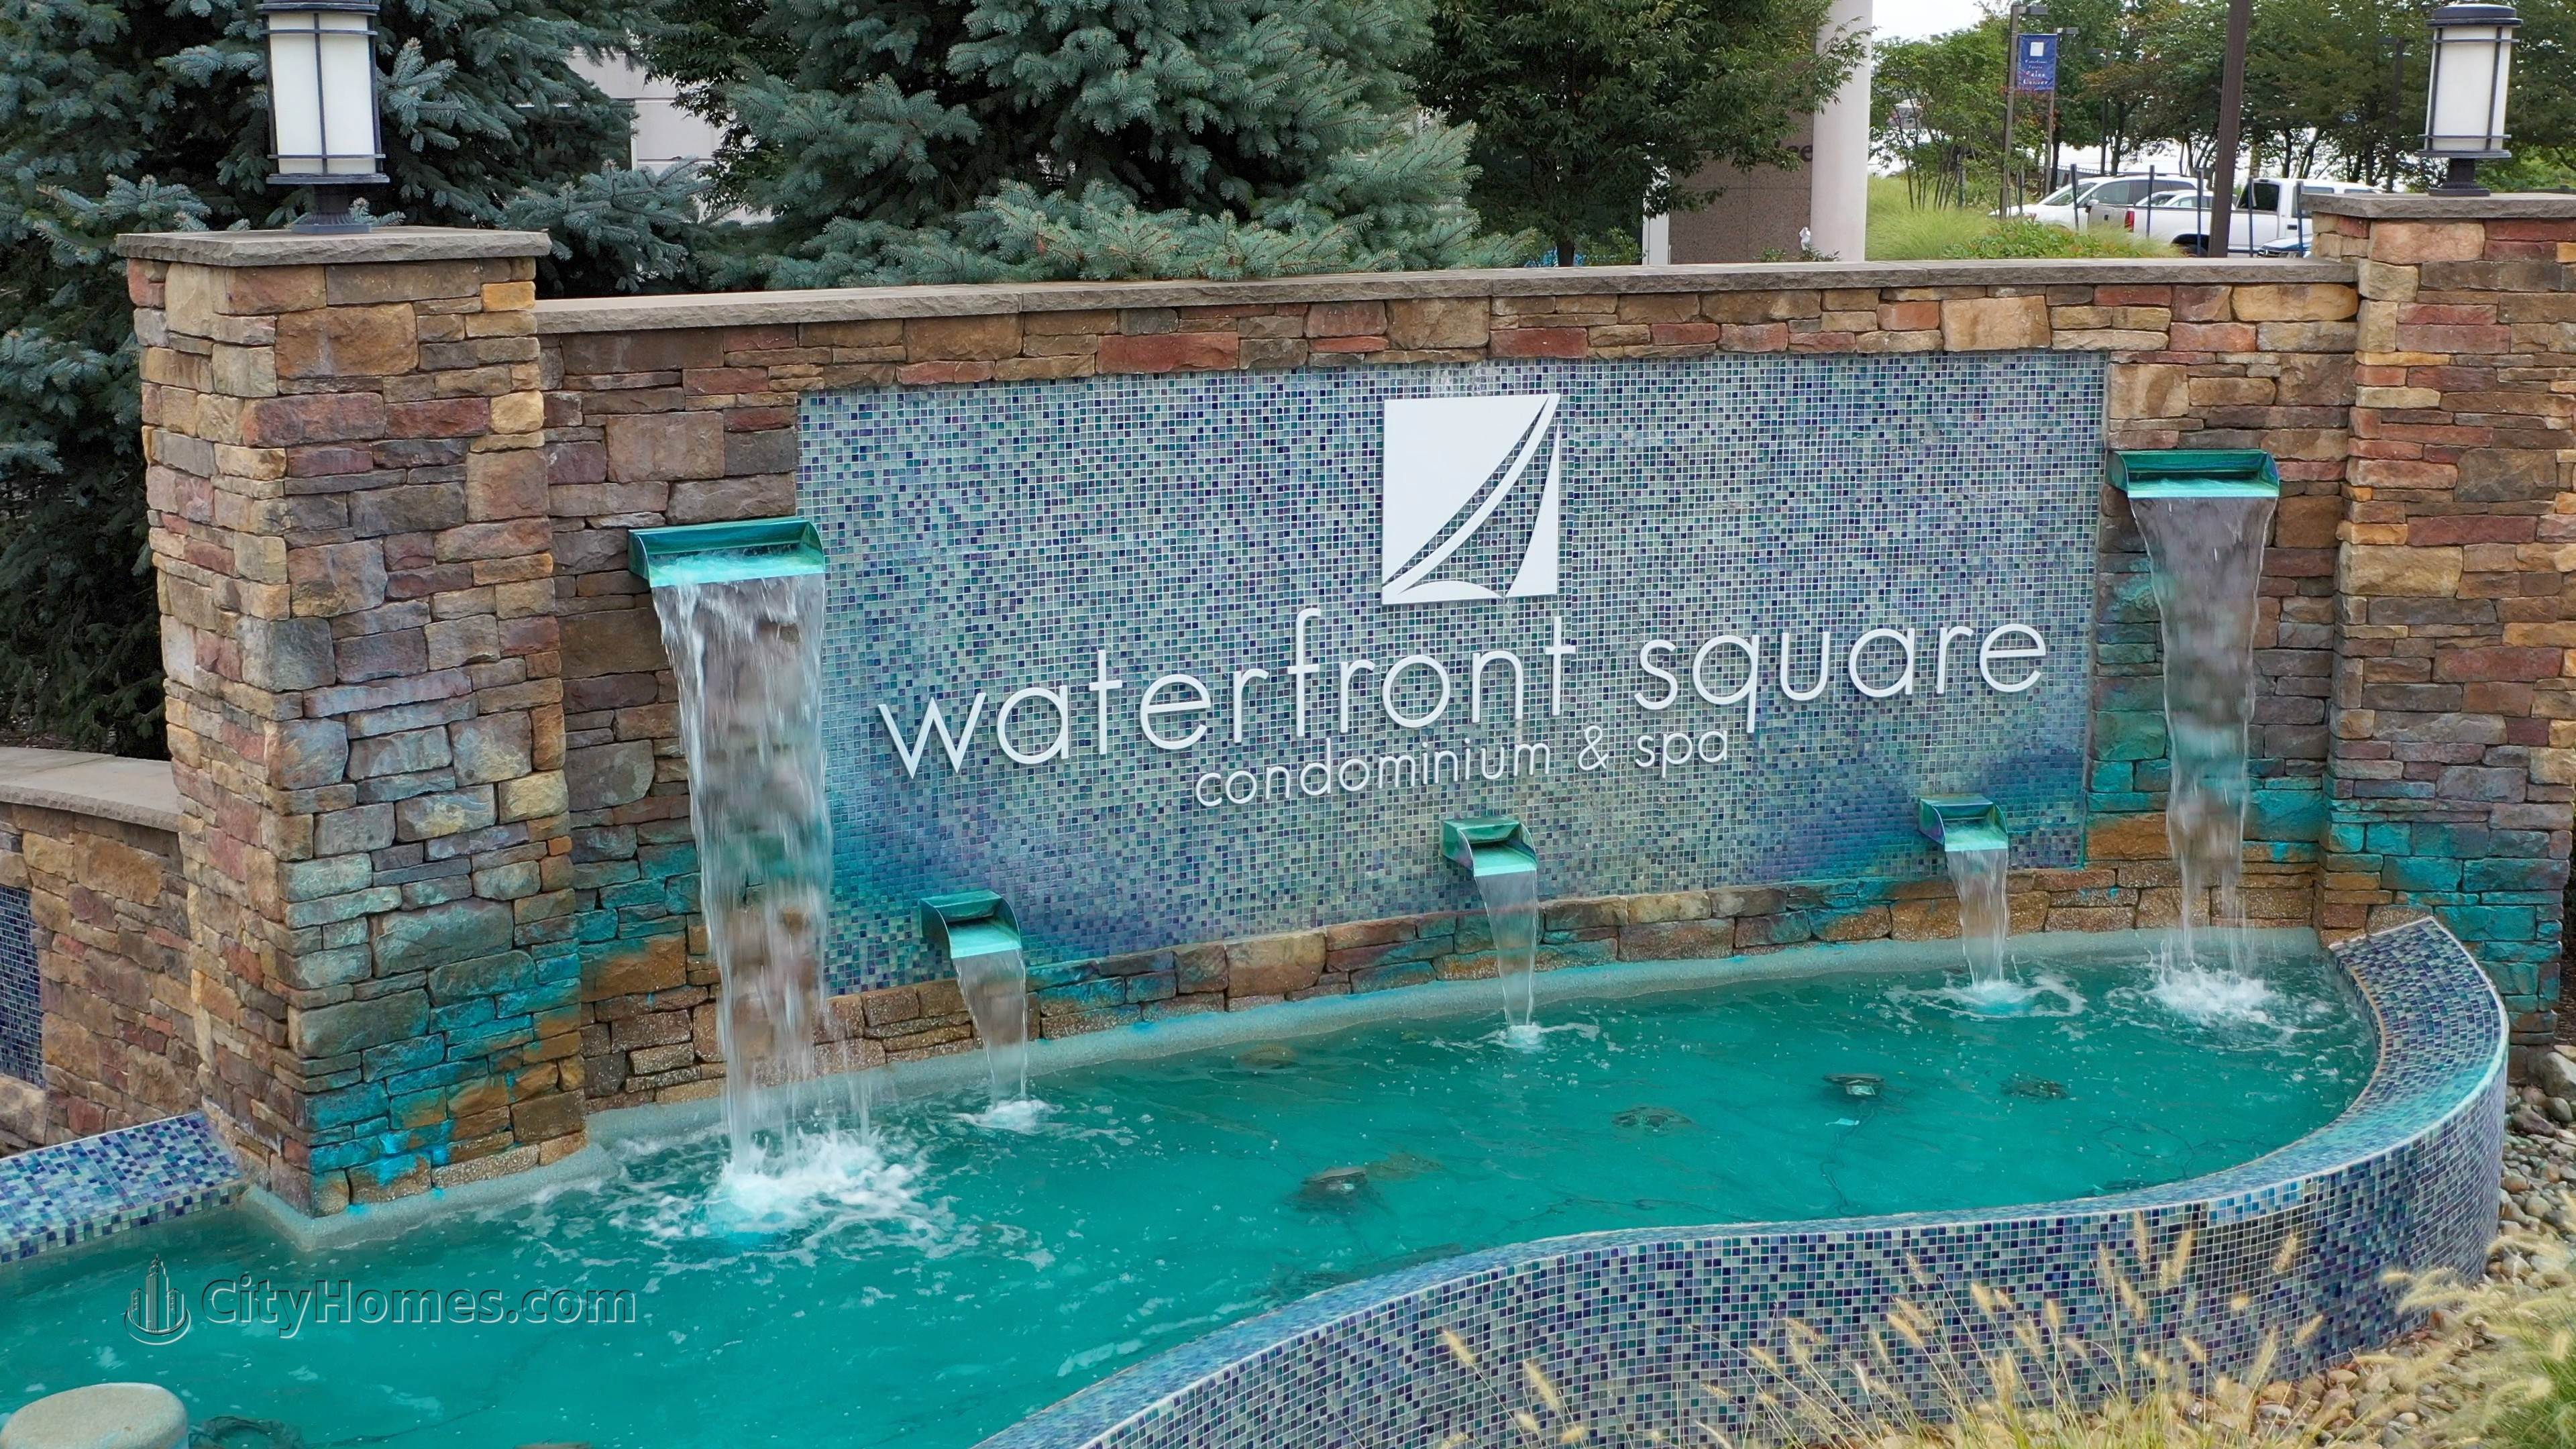 Waterfront Square byggnad vid 901 N Penn St, Northern Liberties, Philadelphia, PA 19123